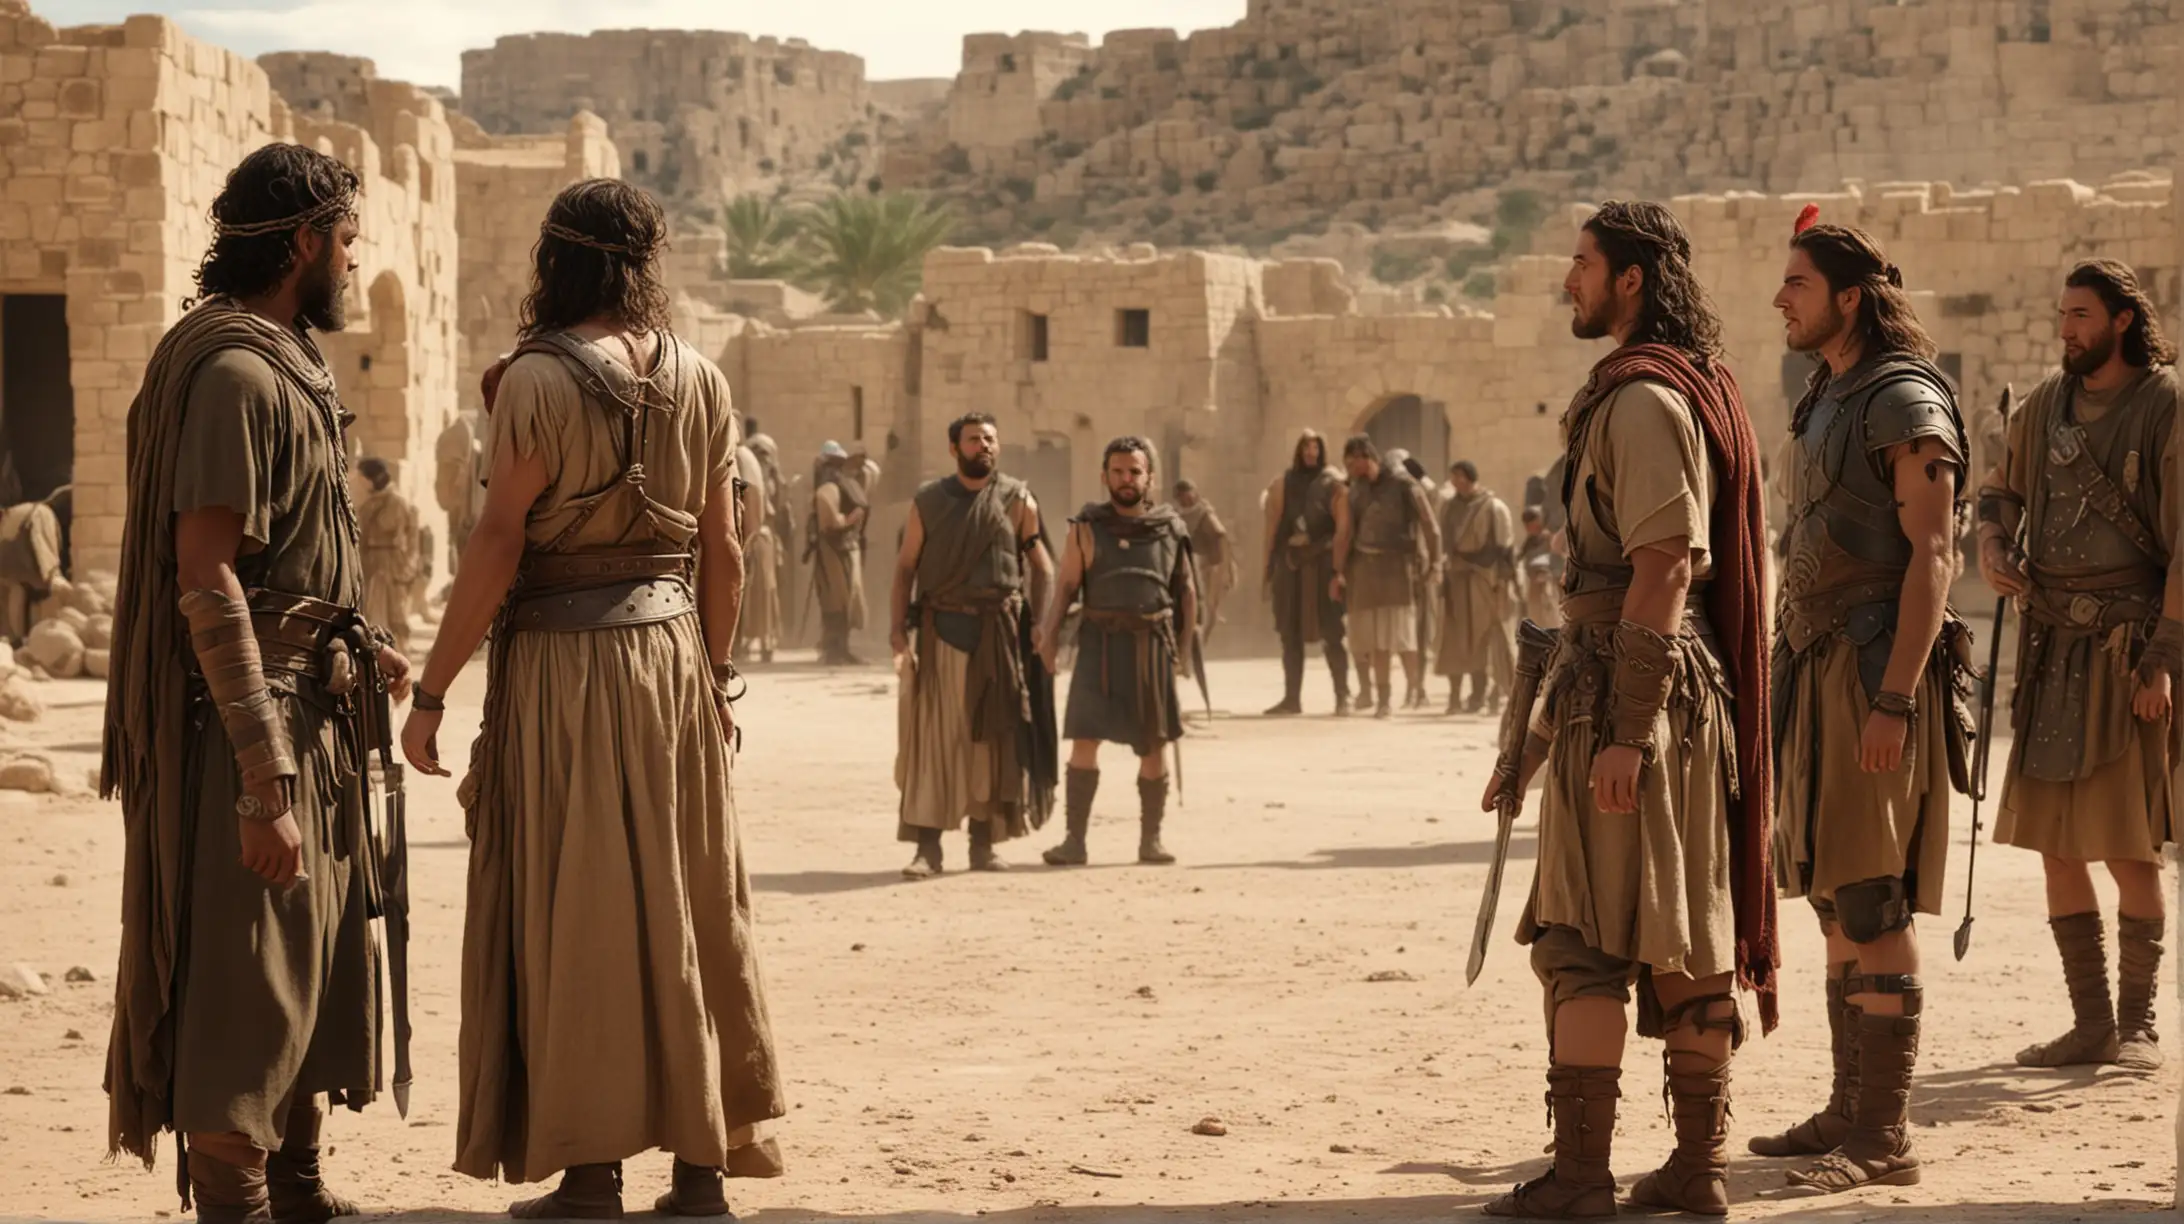 a woman talking to a few men warriors  in a desert city. Set during the Biblical era of King David.